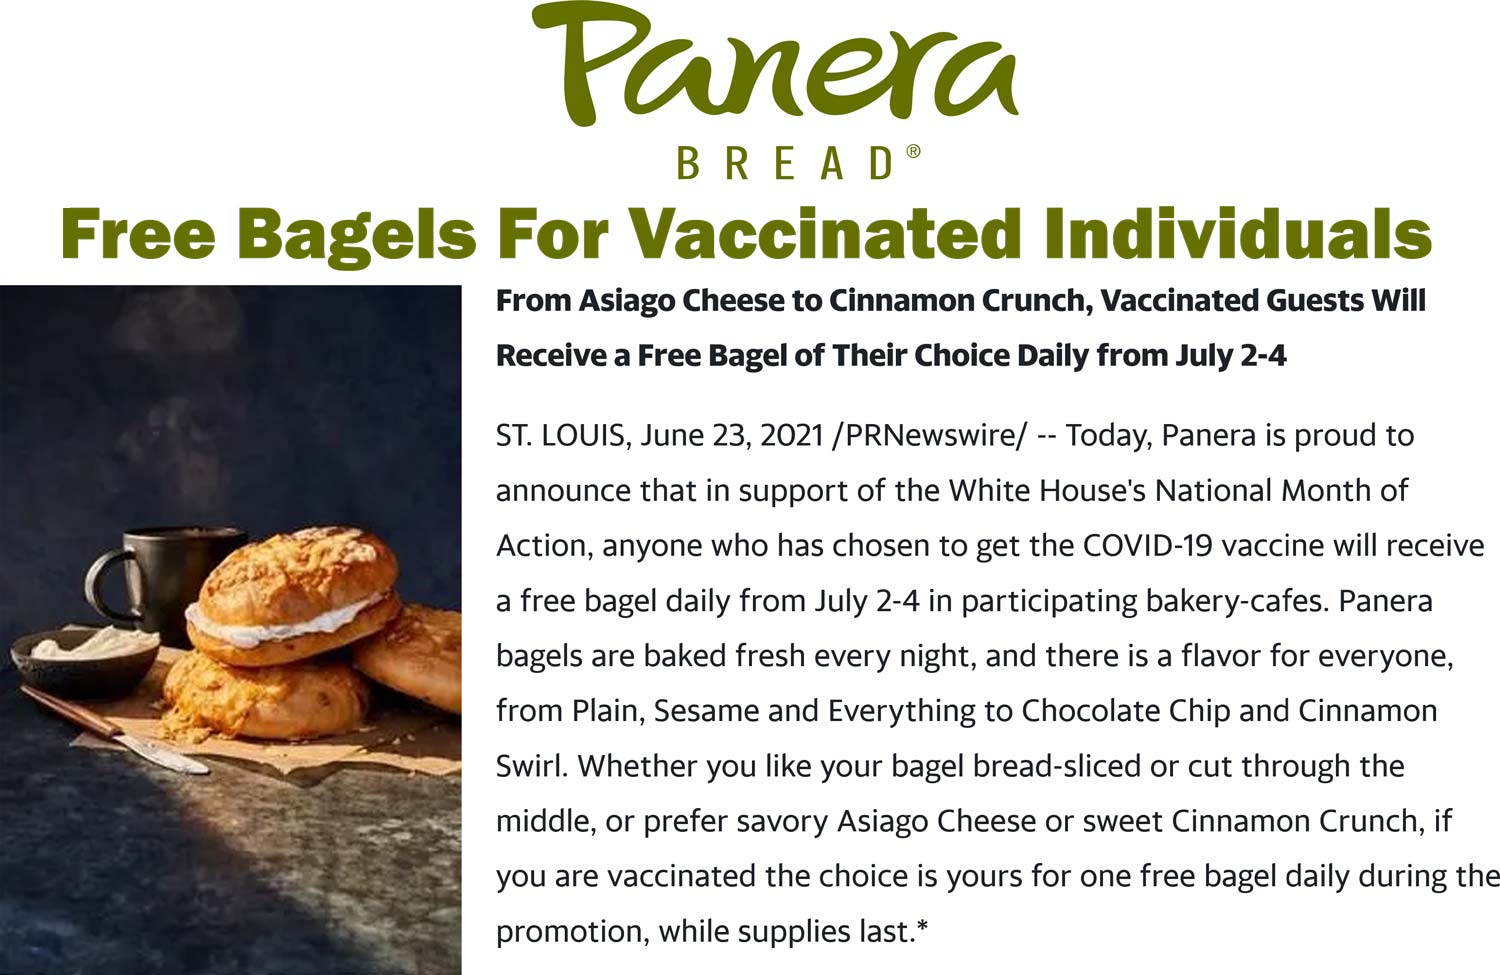 Panera Bread restaurants Coupon  Free bagels daily for vaccinated at Panera Bread restaurants #panerabread 